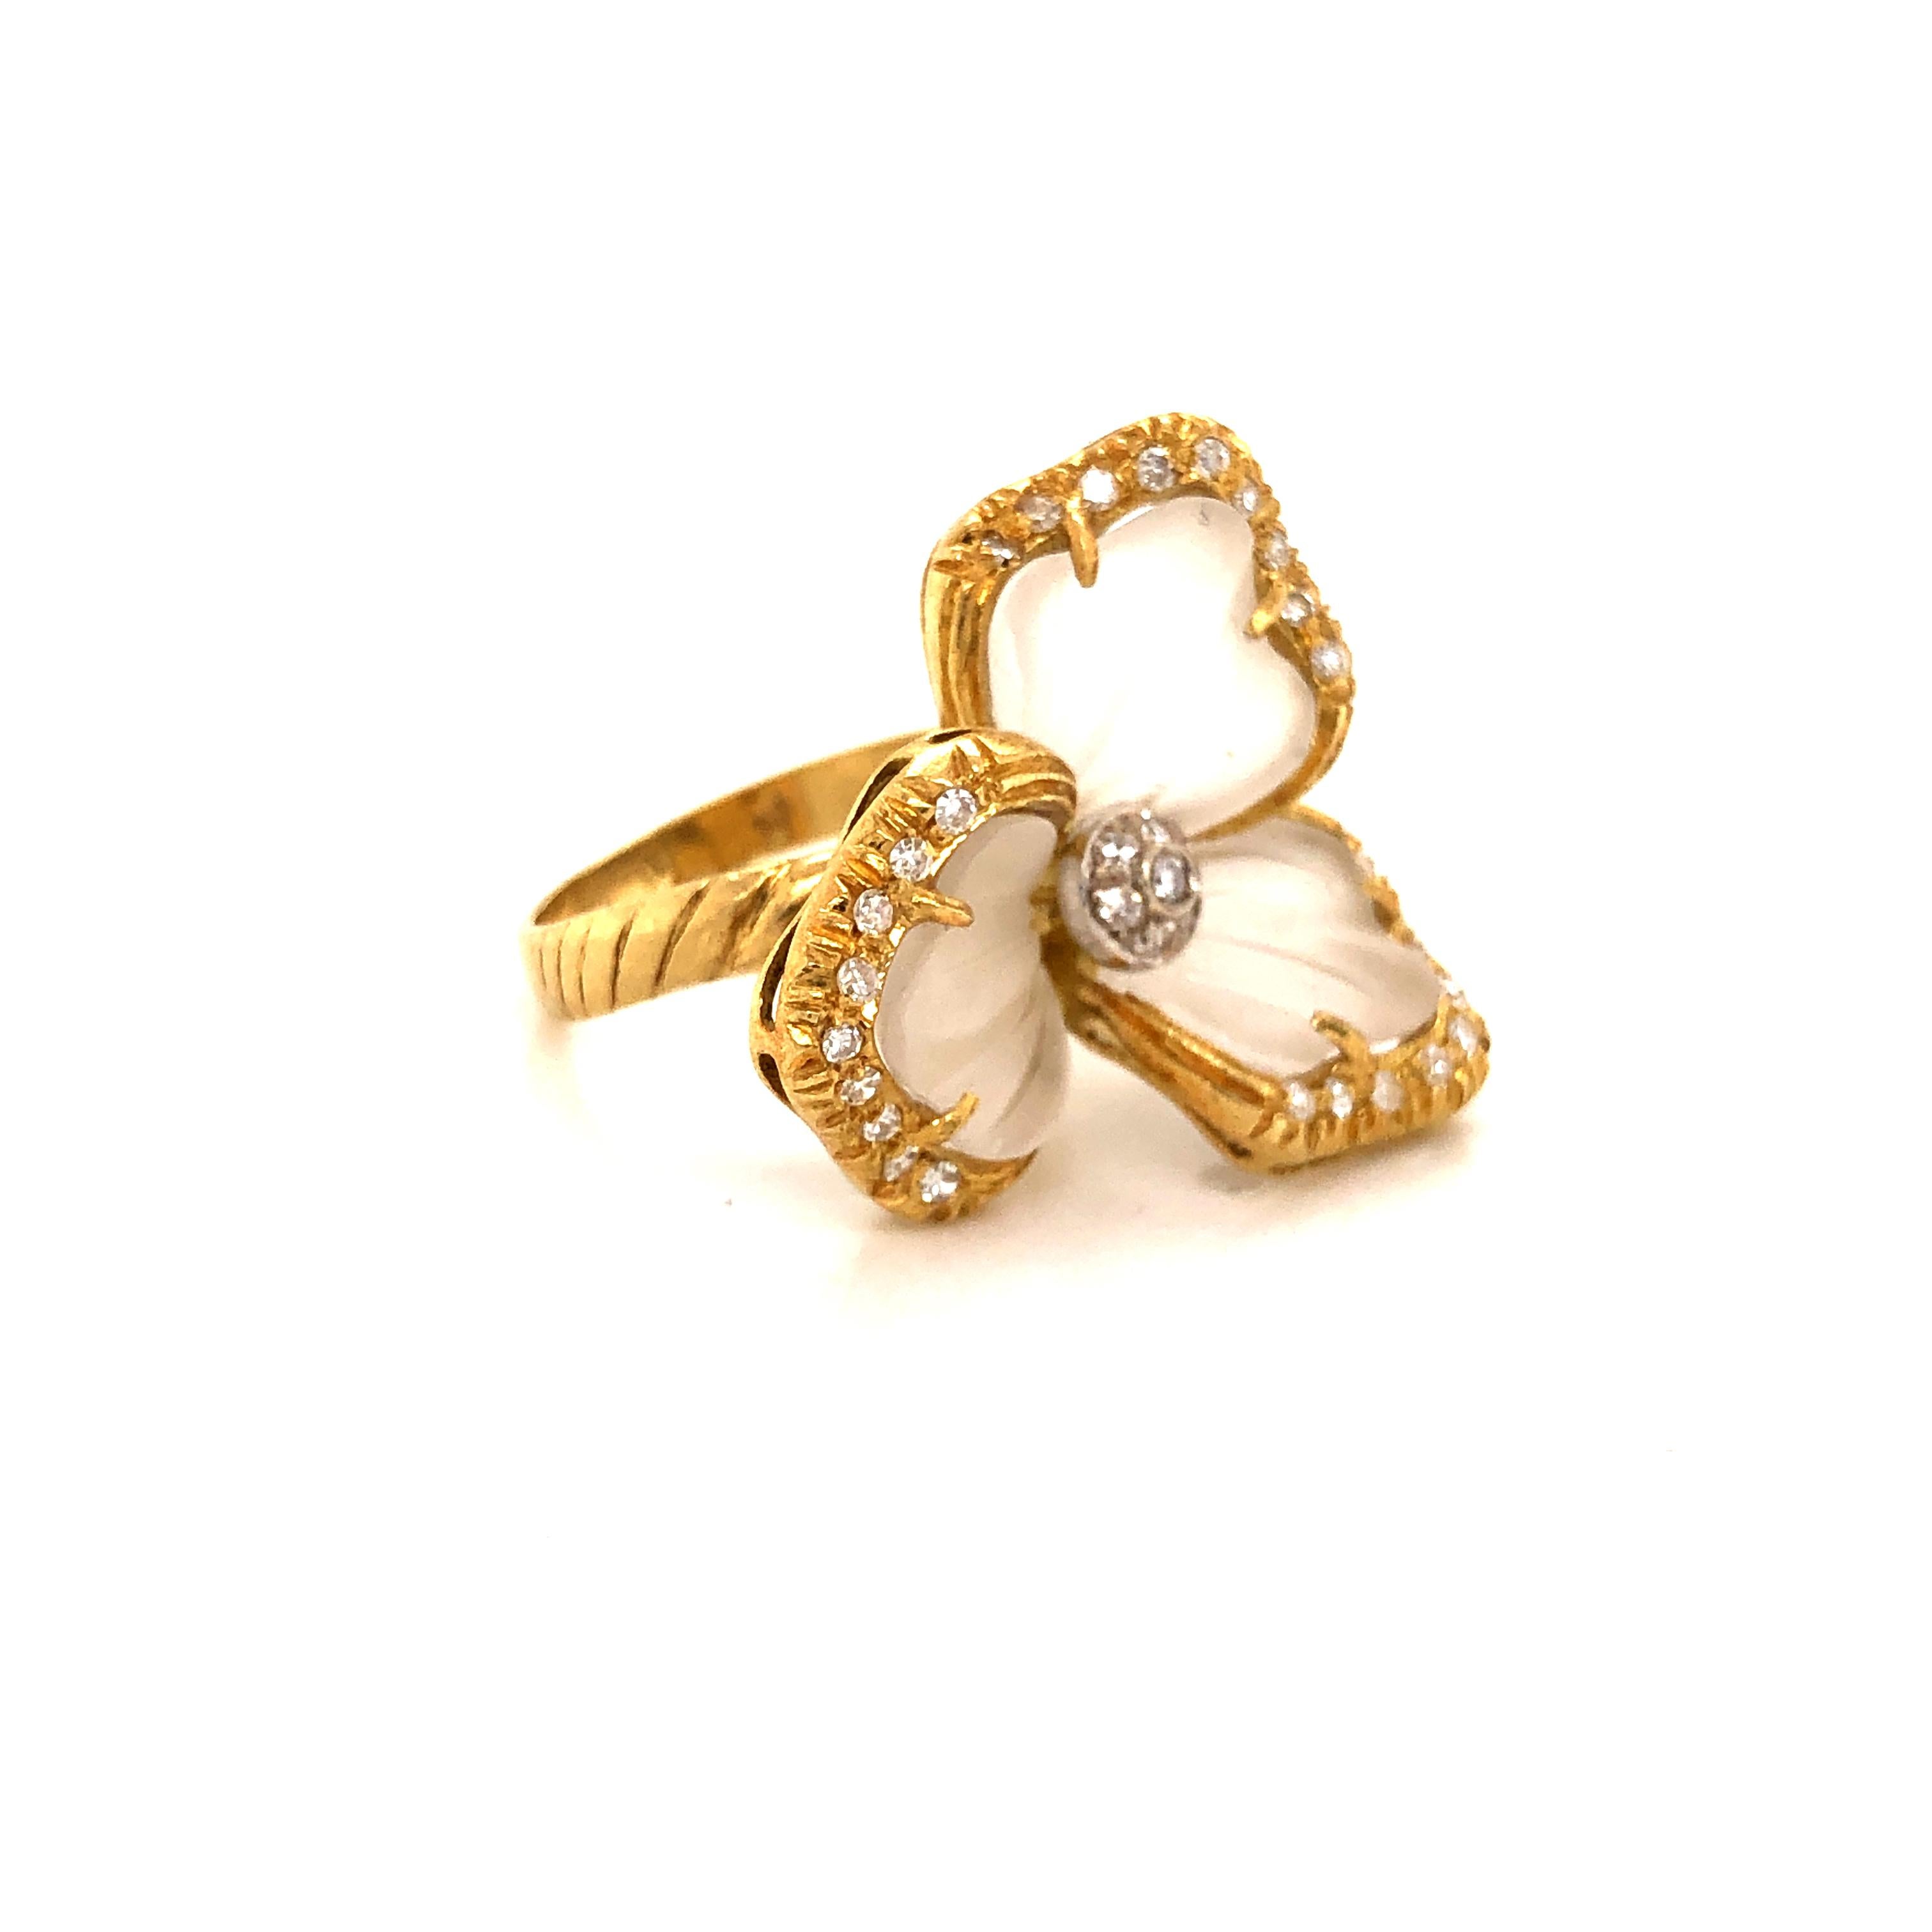 Estate Rock Crystal Quartz and Diamond Floral Ring and Earring Set 18 Karat Gold 1